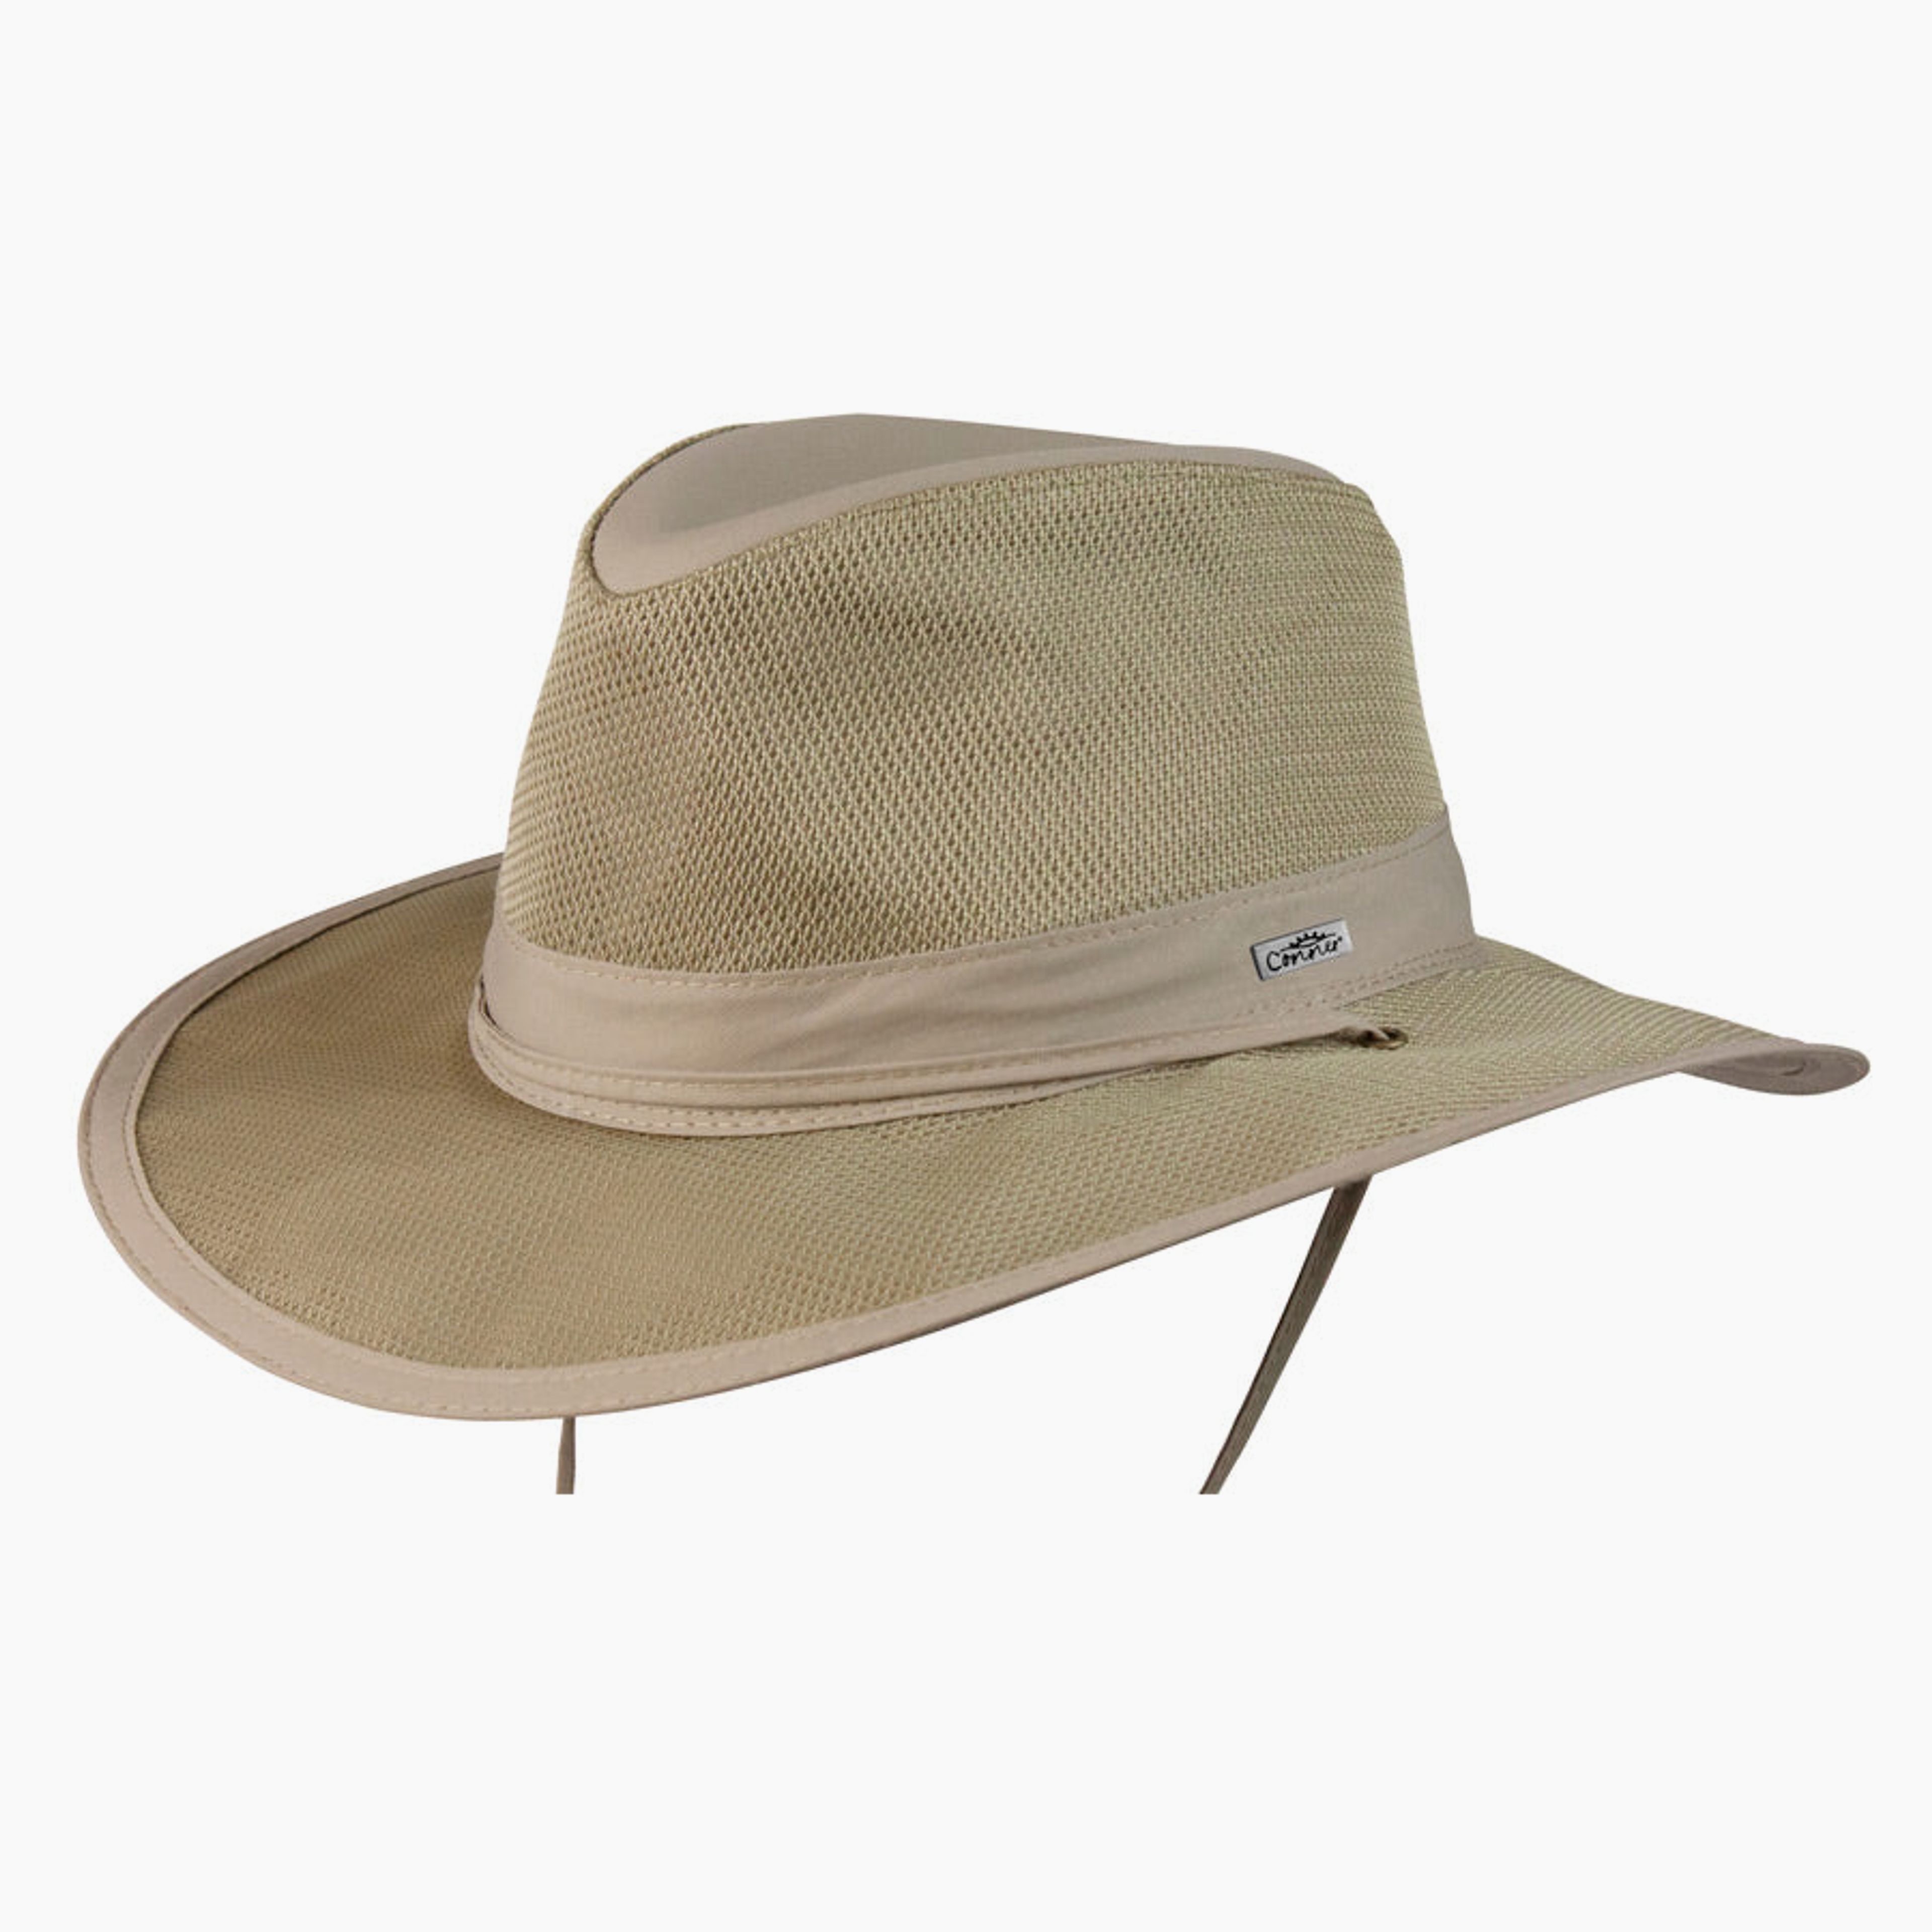 Sunblocker Lightweight Recycled Outdoor Hat